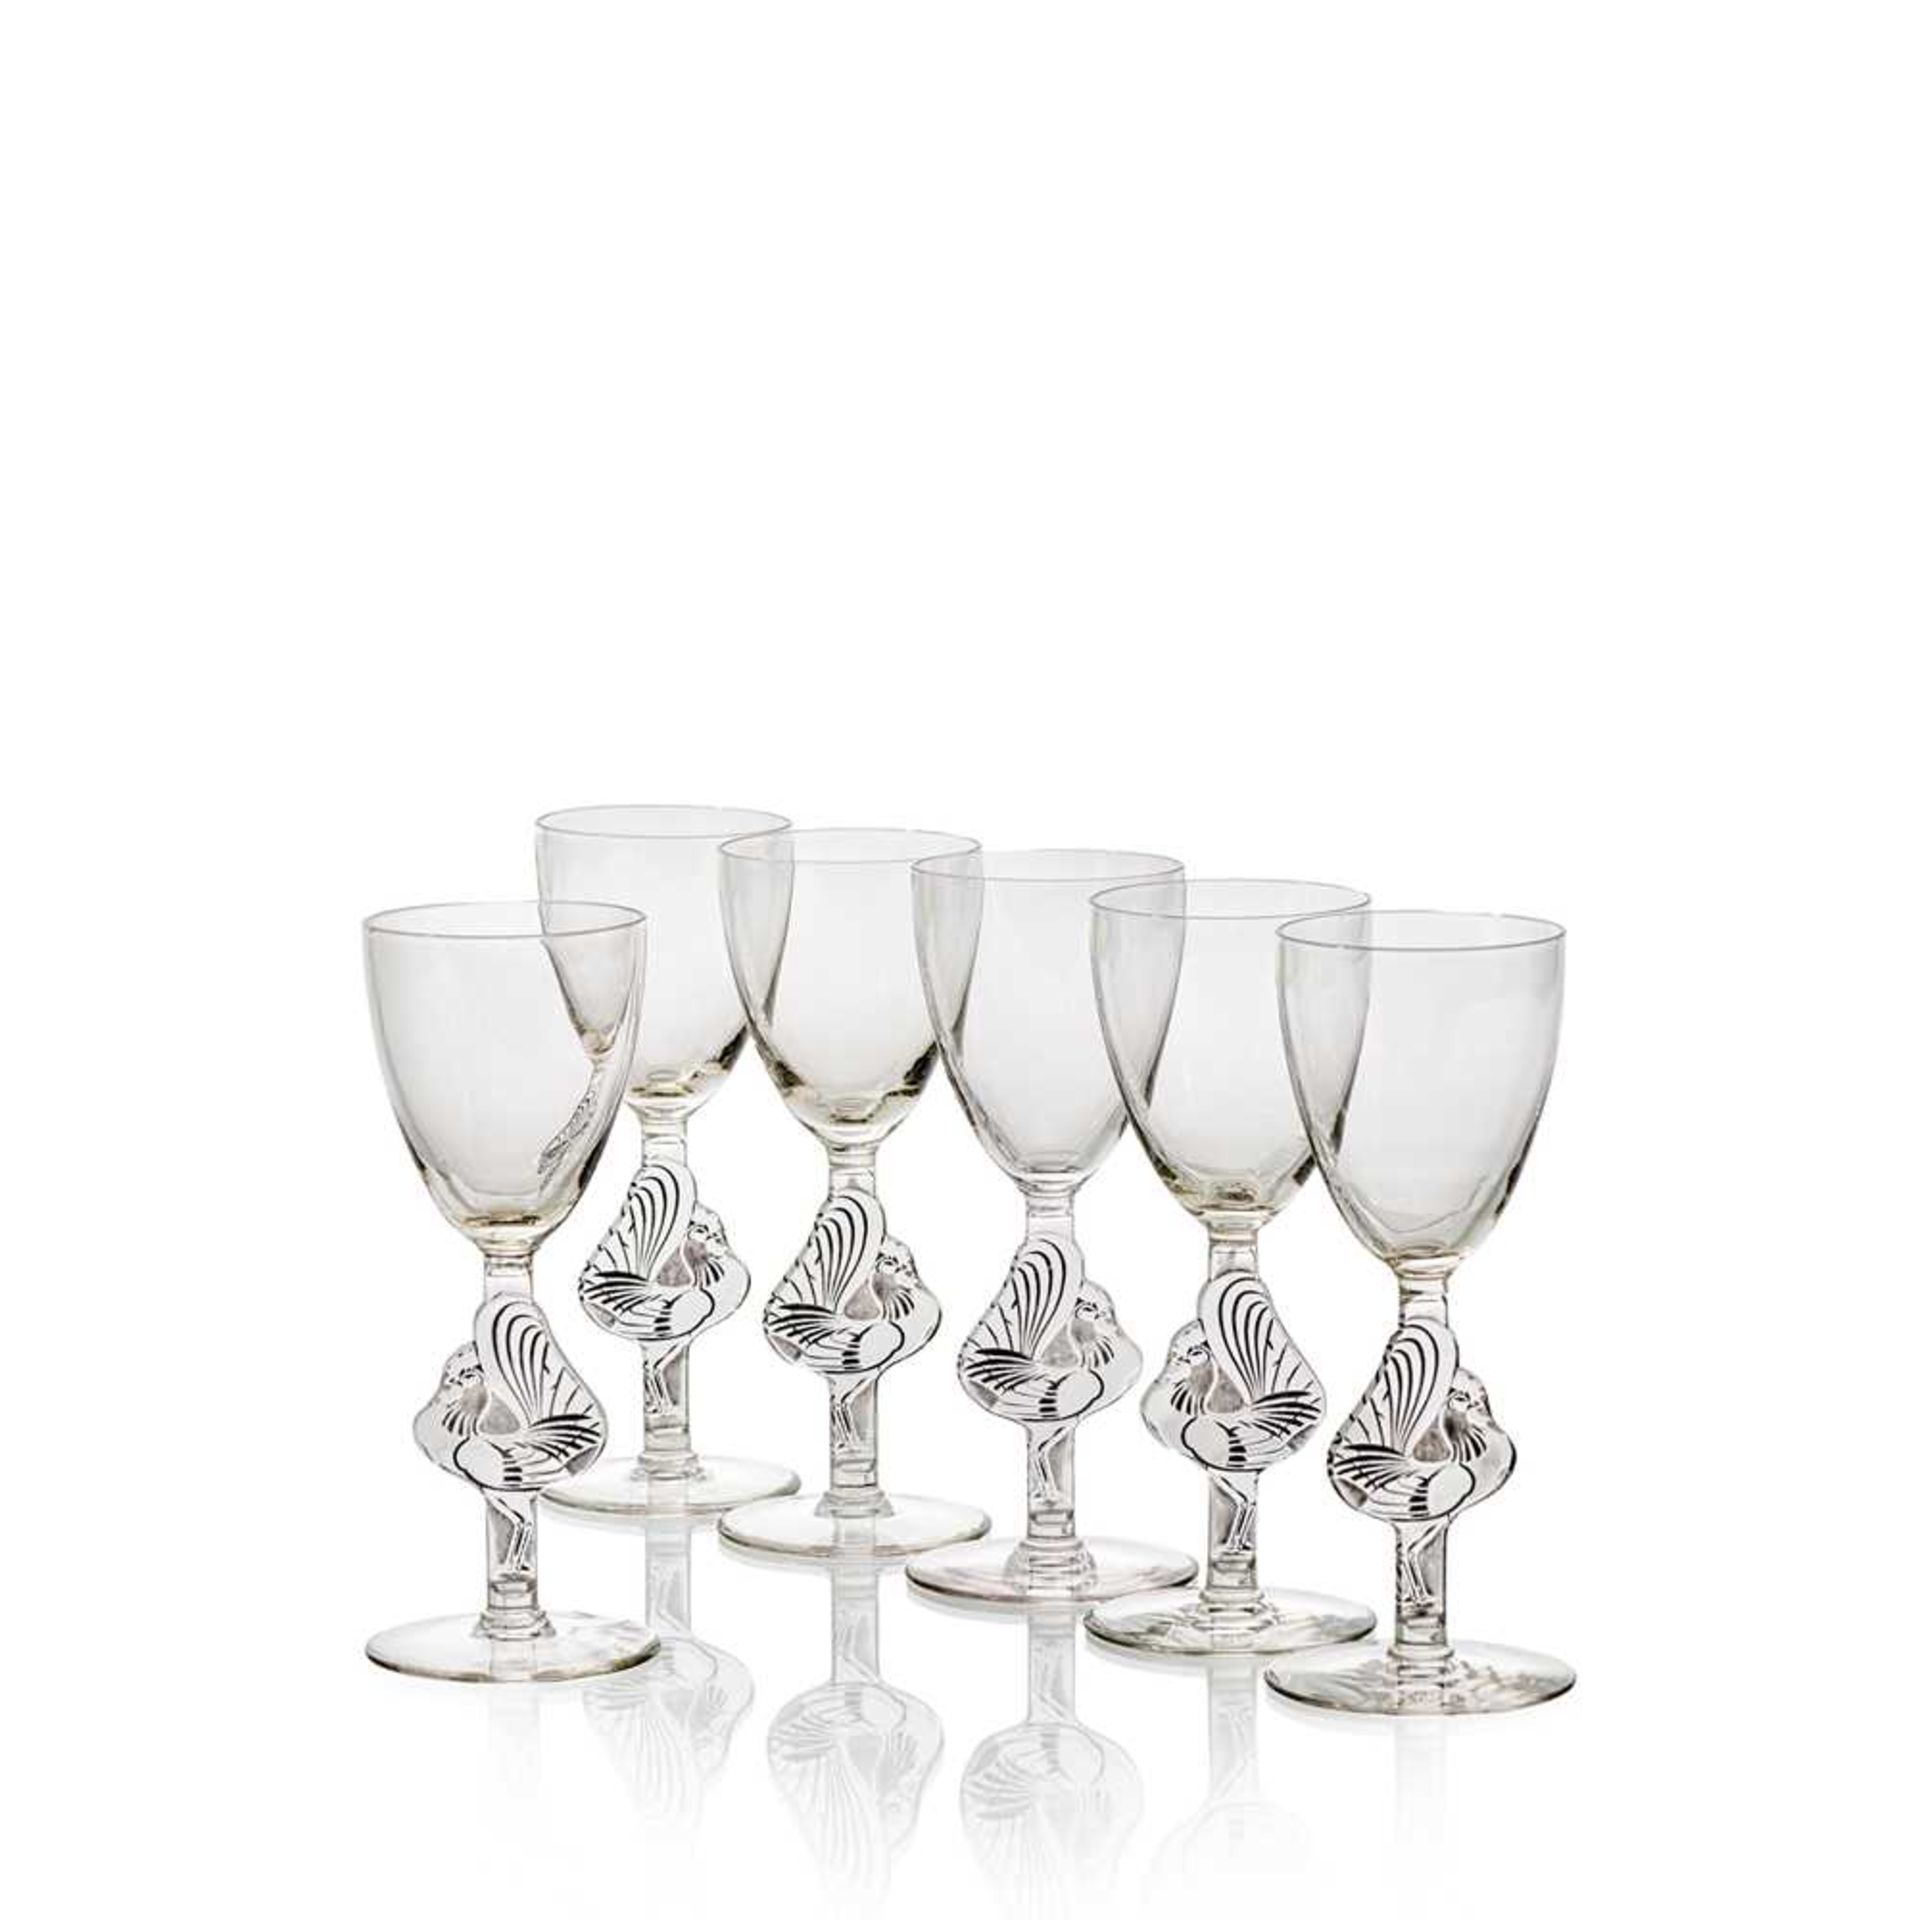 ‡ René Lalique (French 1860-1945) SIX WILLIAM COCKTAIL GLASSES, NO. 3762